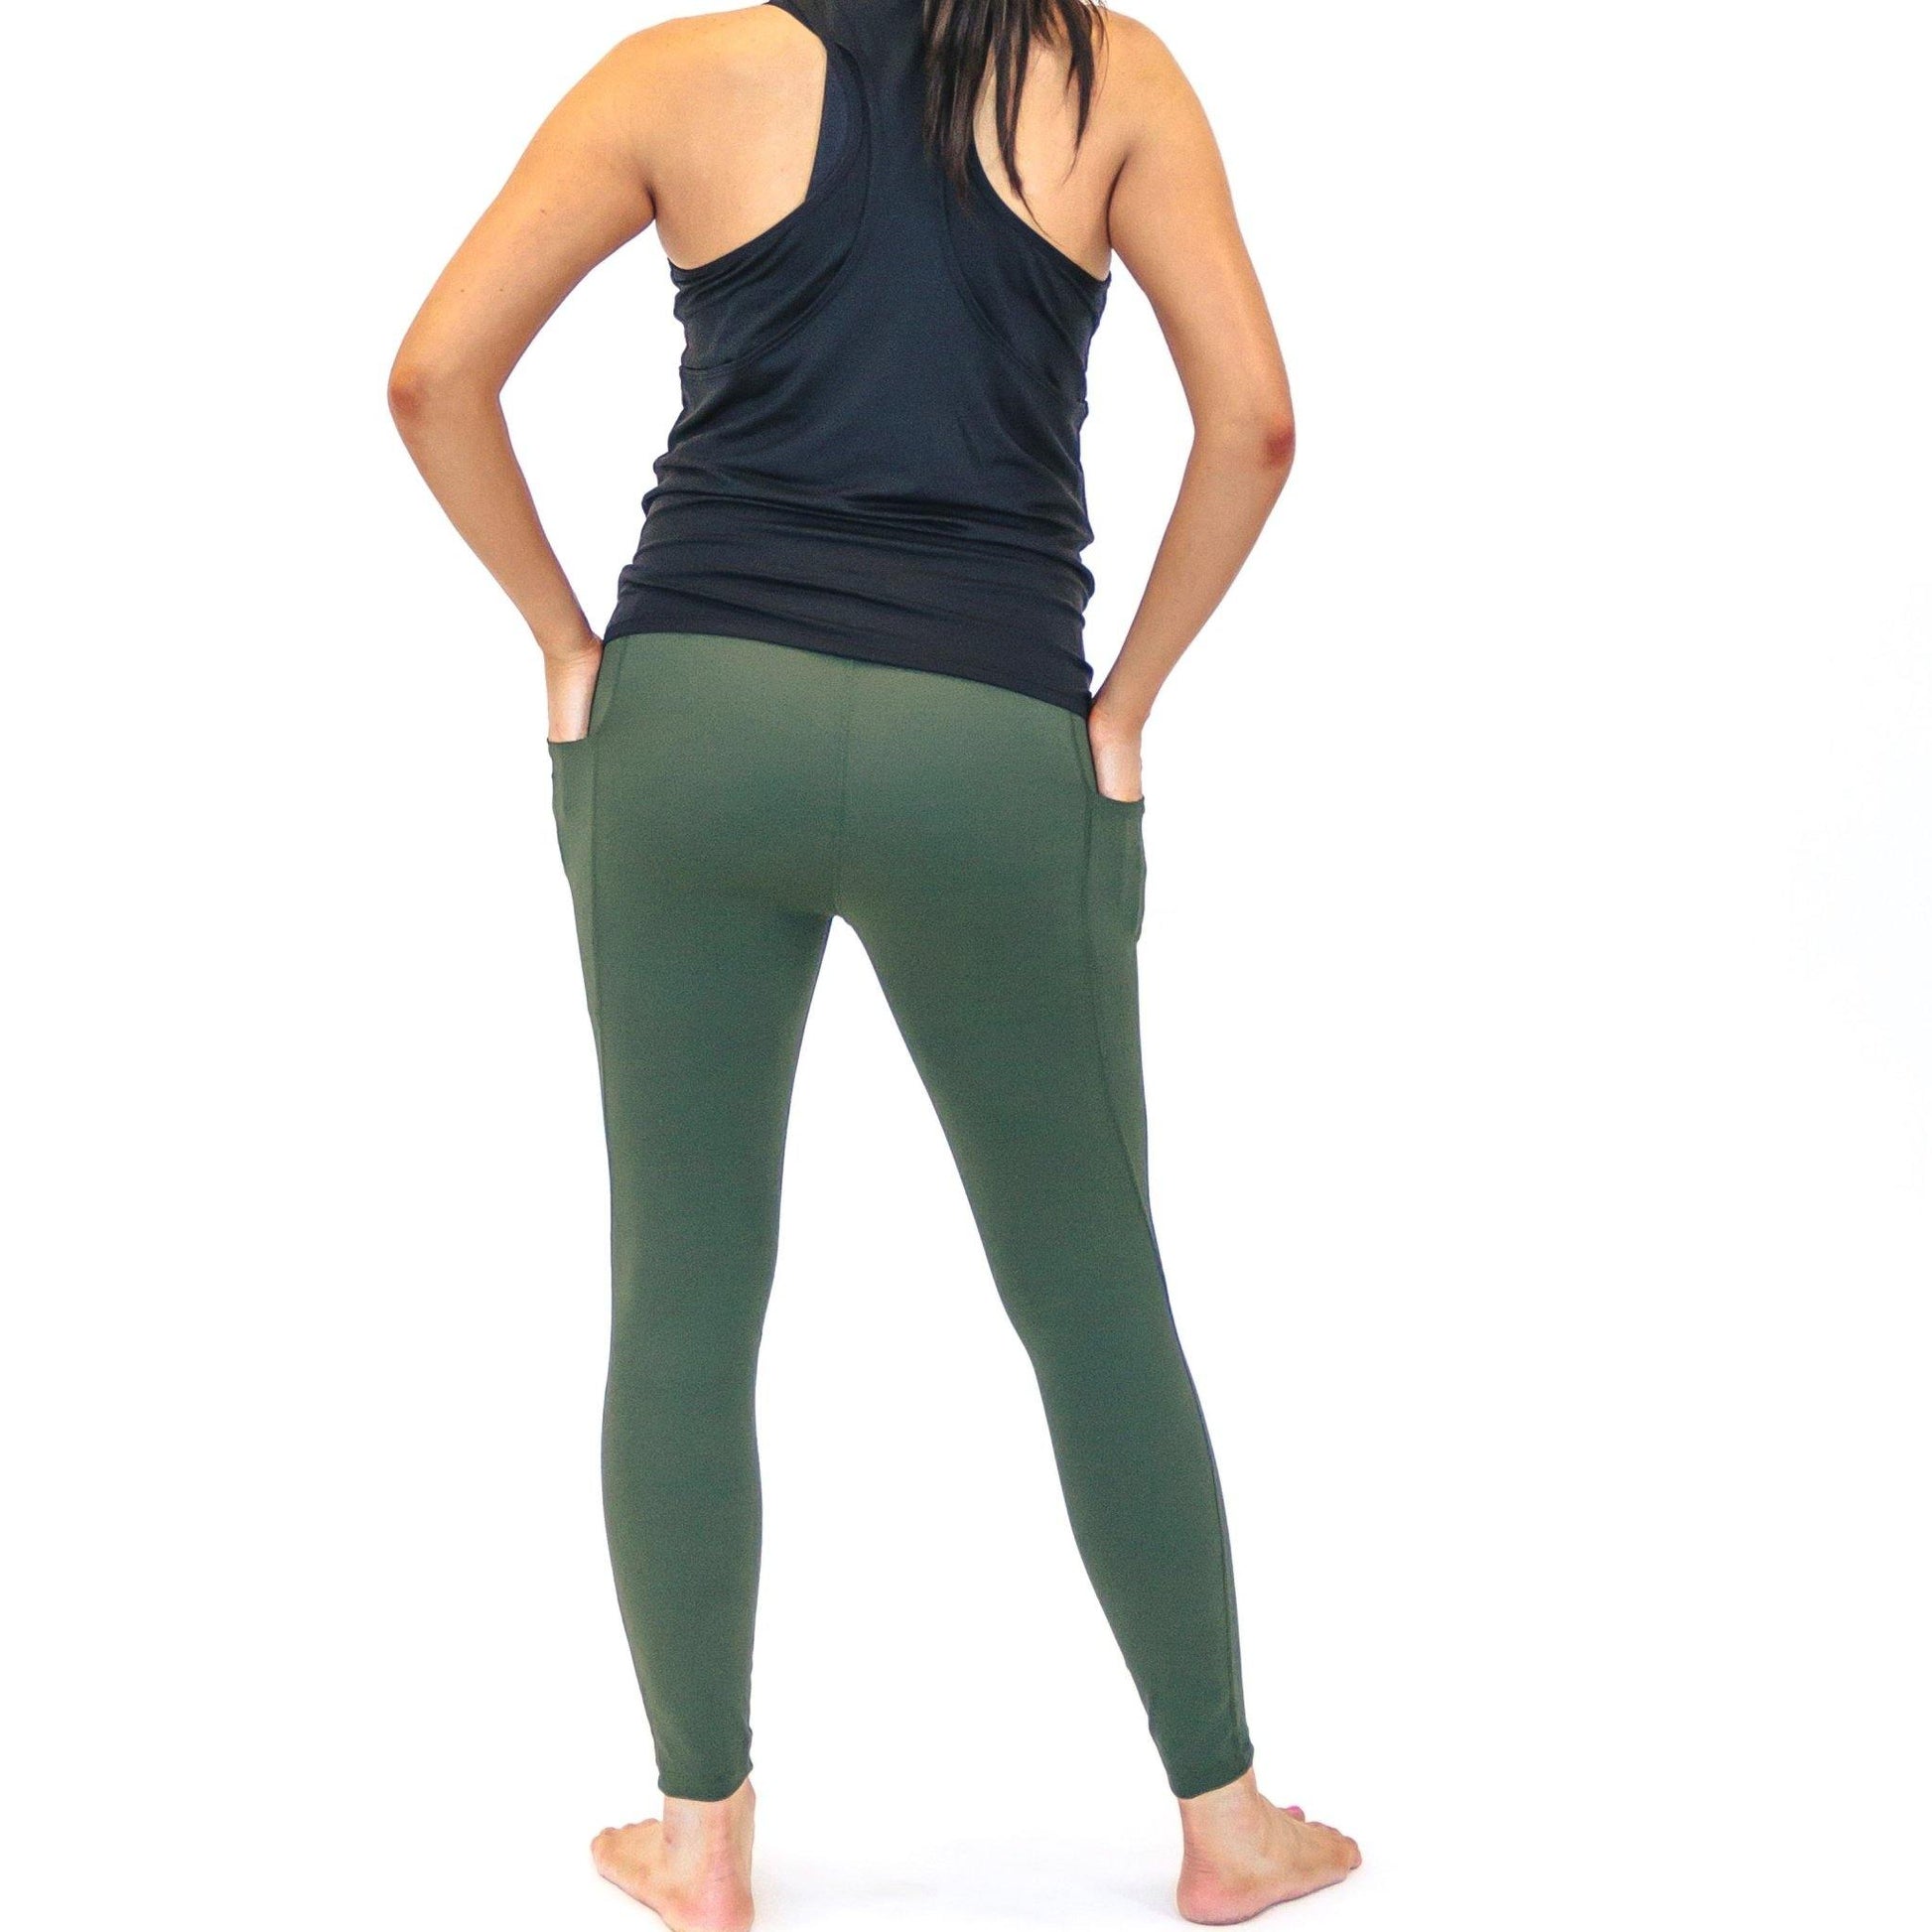 Lux Maternity Pants - Evergreen - Senita Athletics